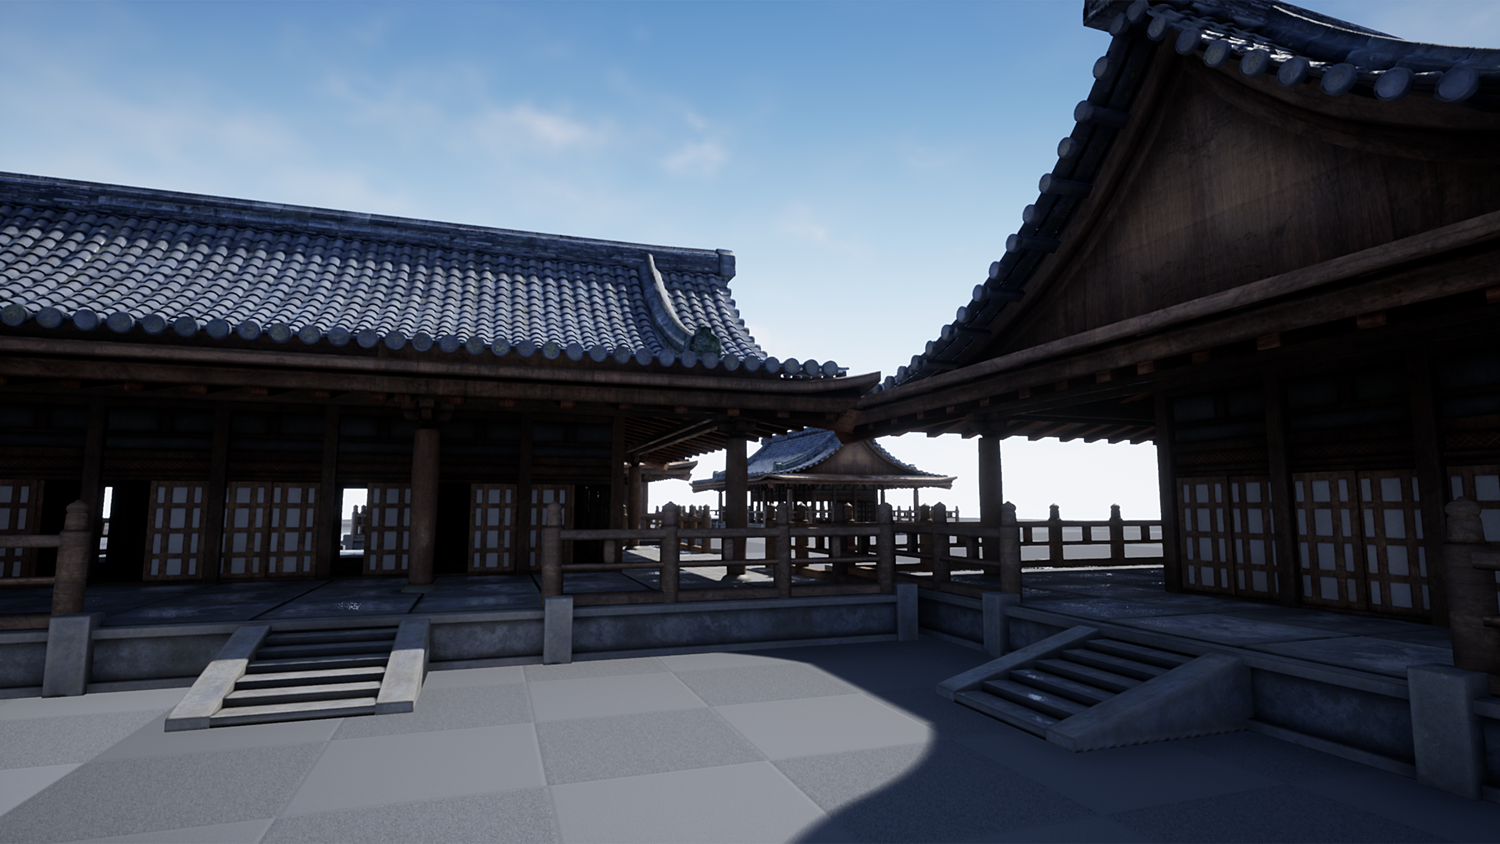 Asian Temple - UE4